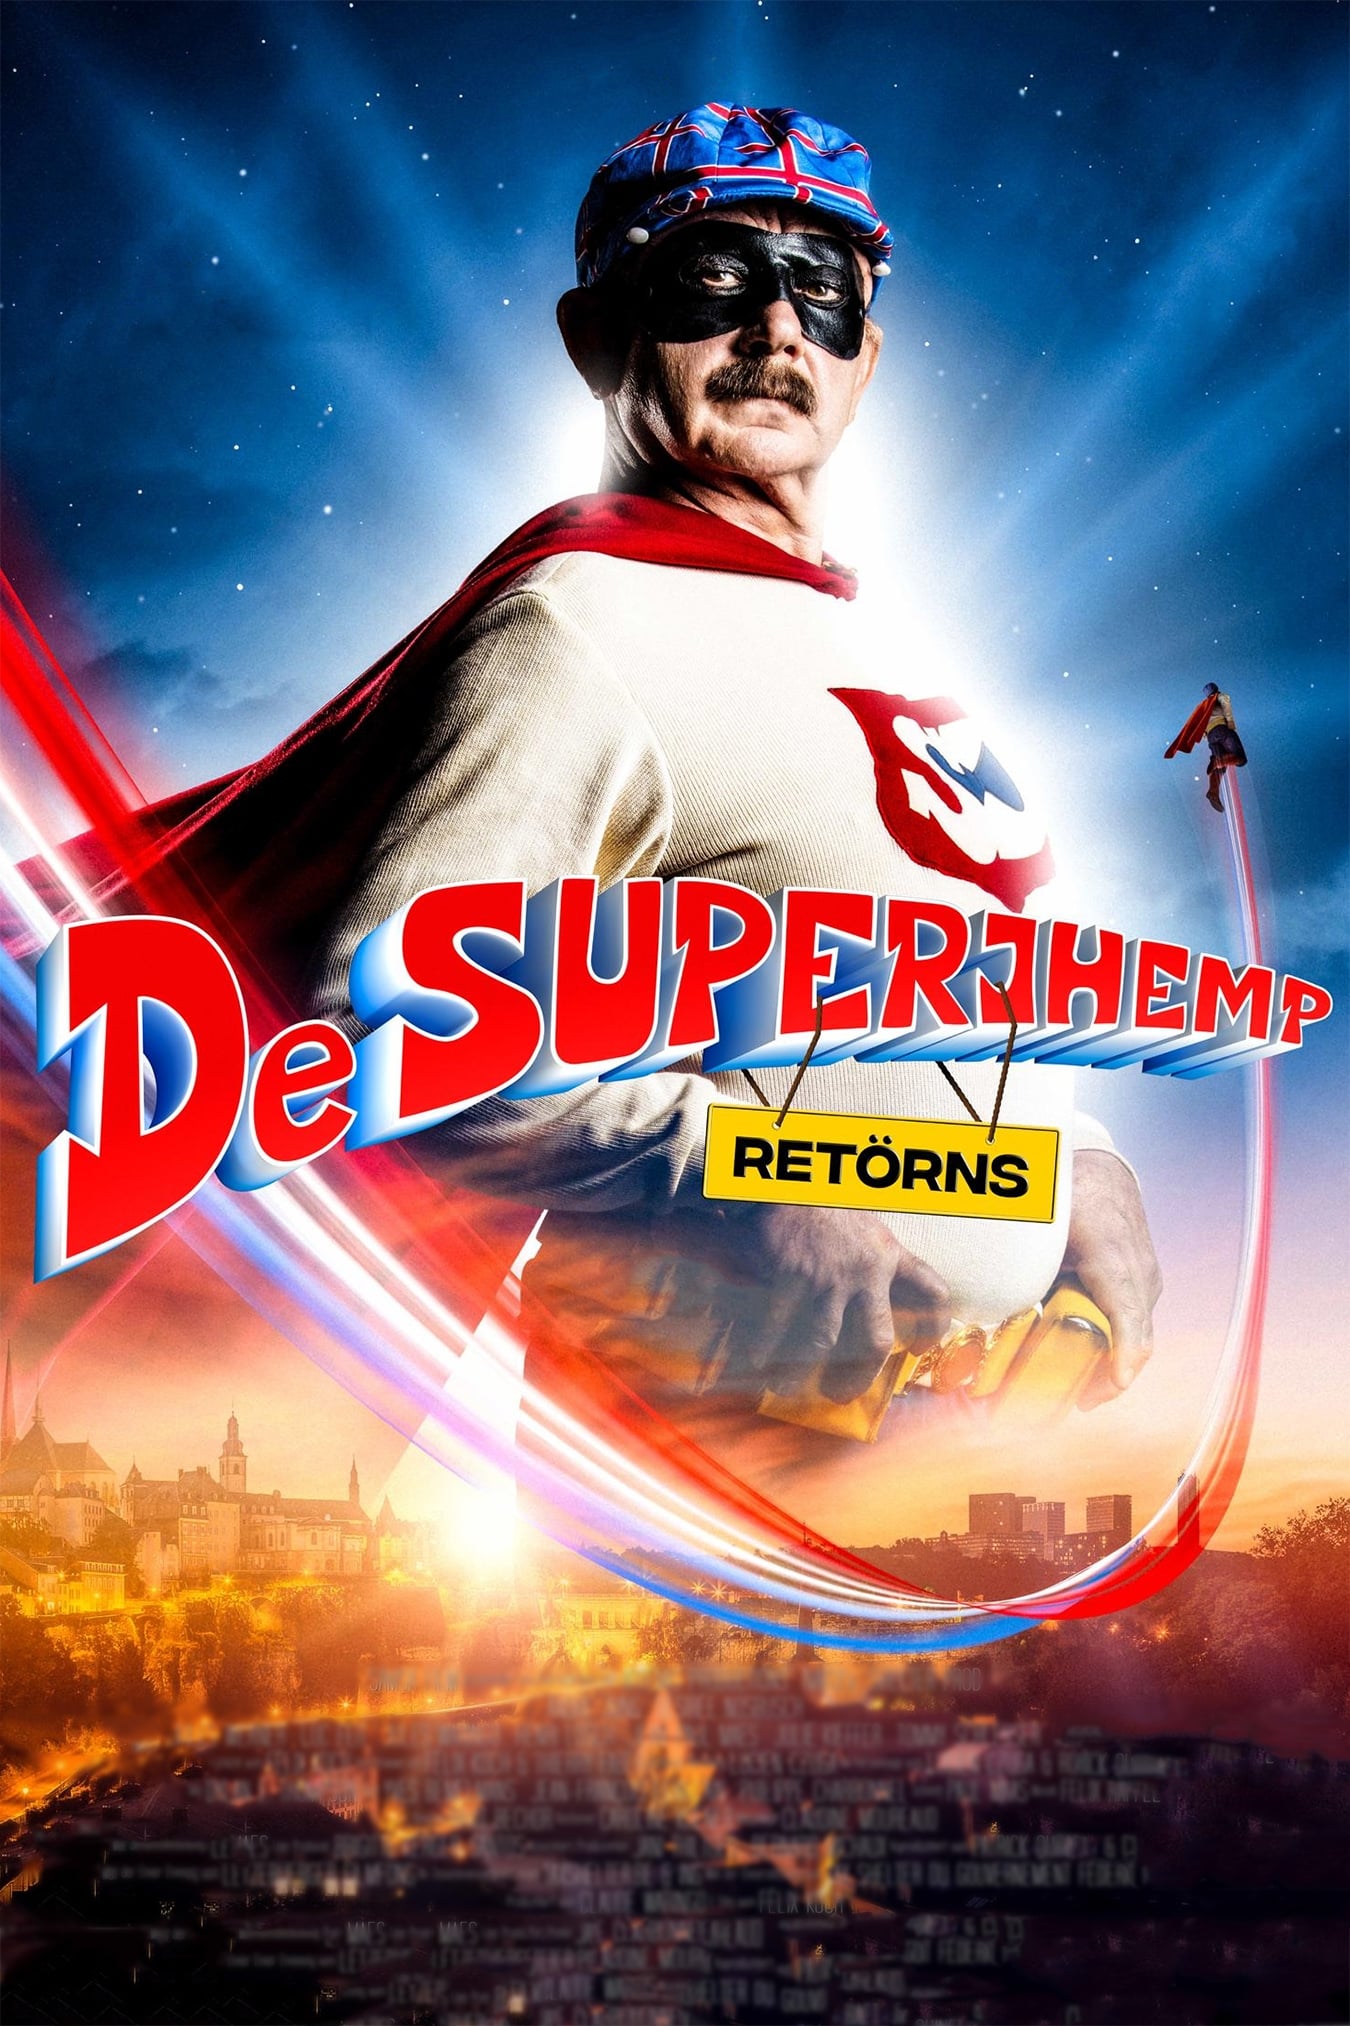 Superchamp Returns